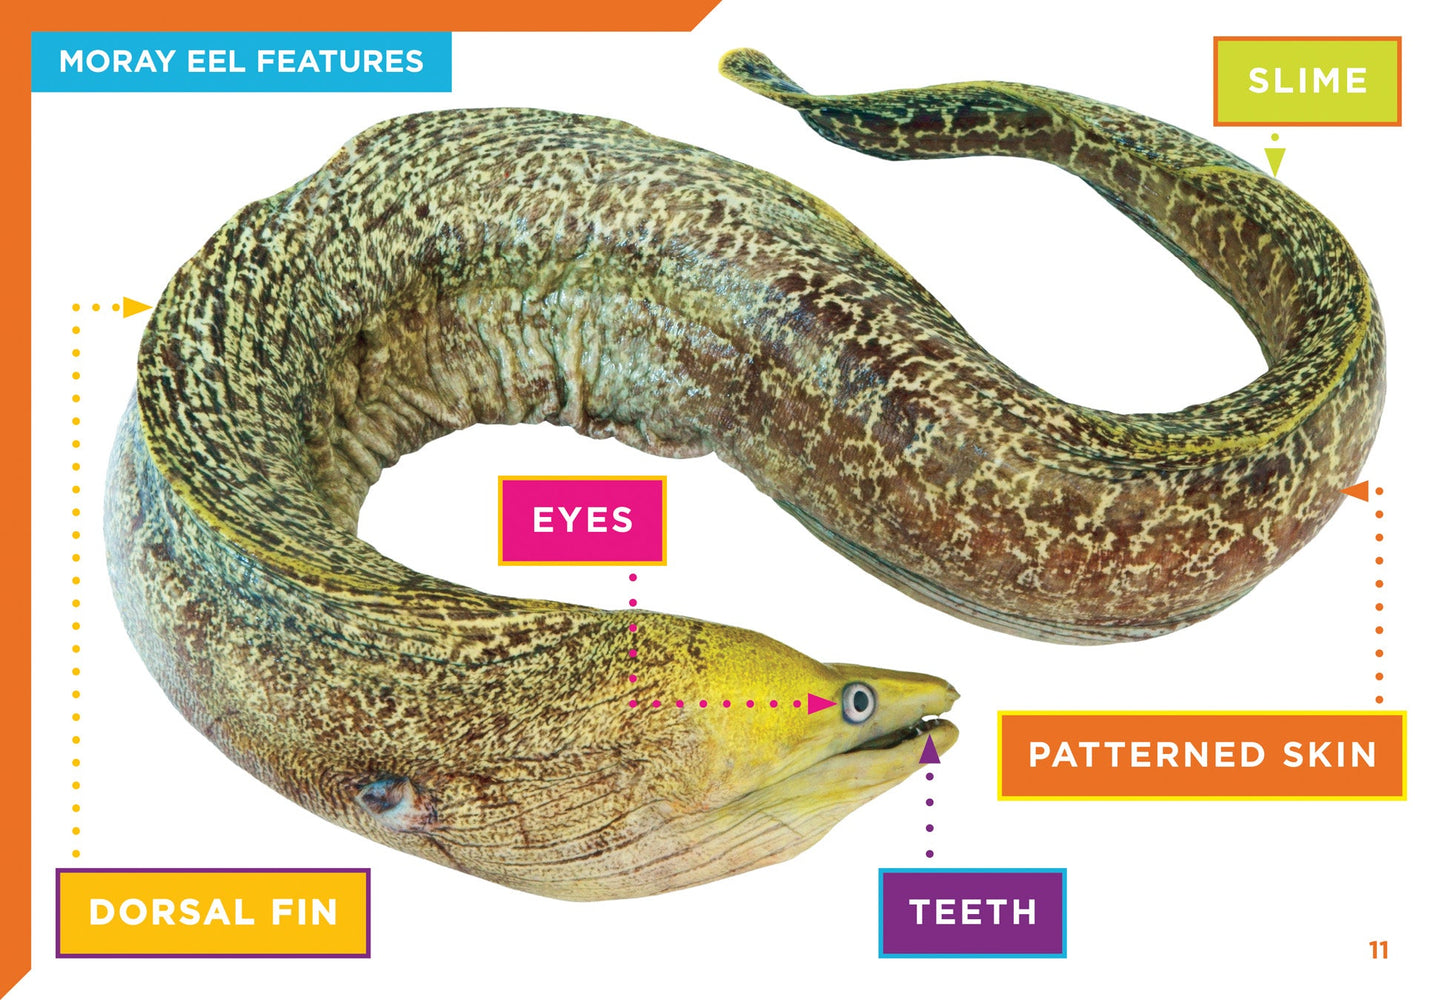 Super Sea Creatures: Moray Eels